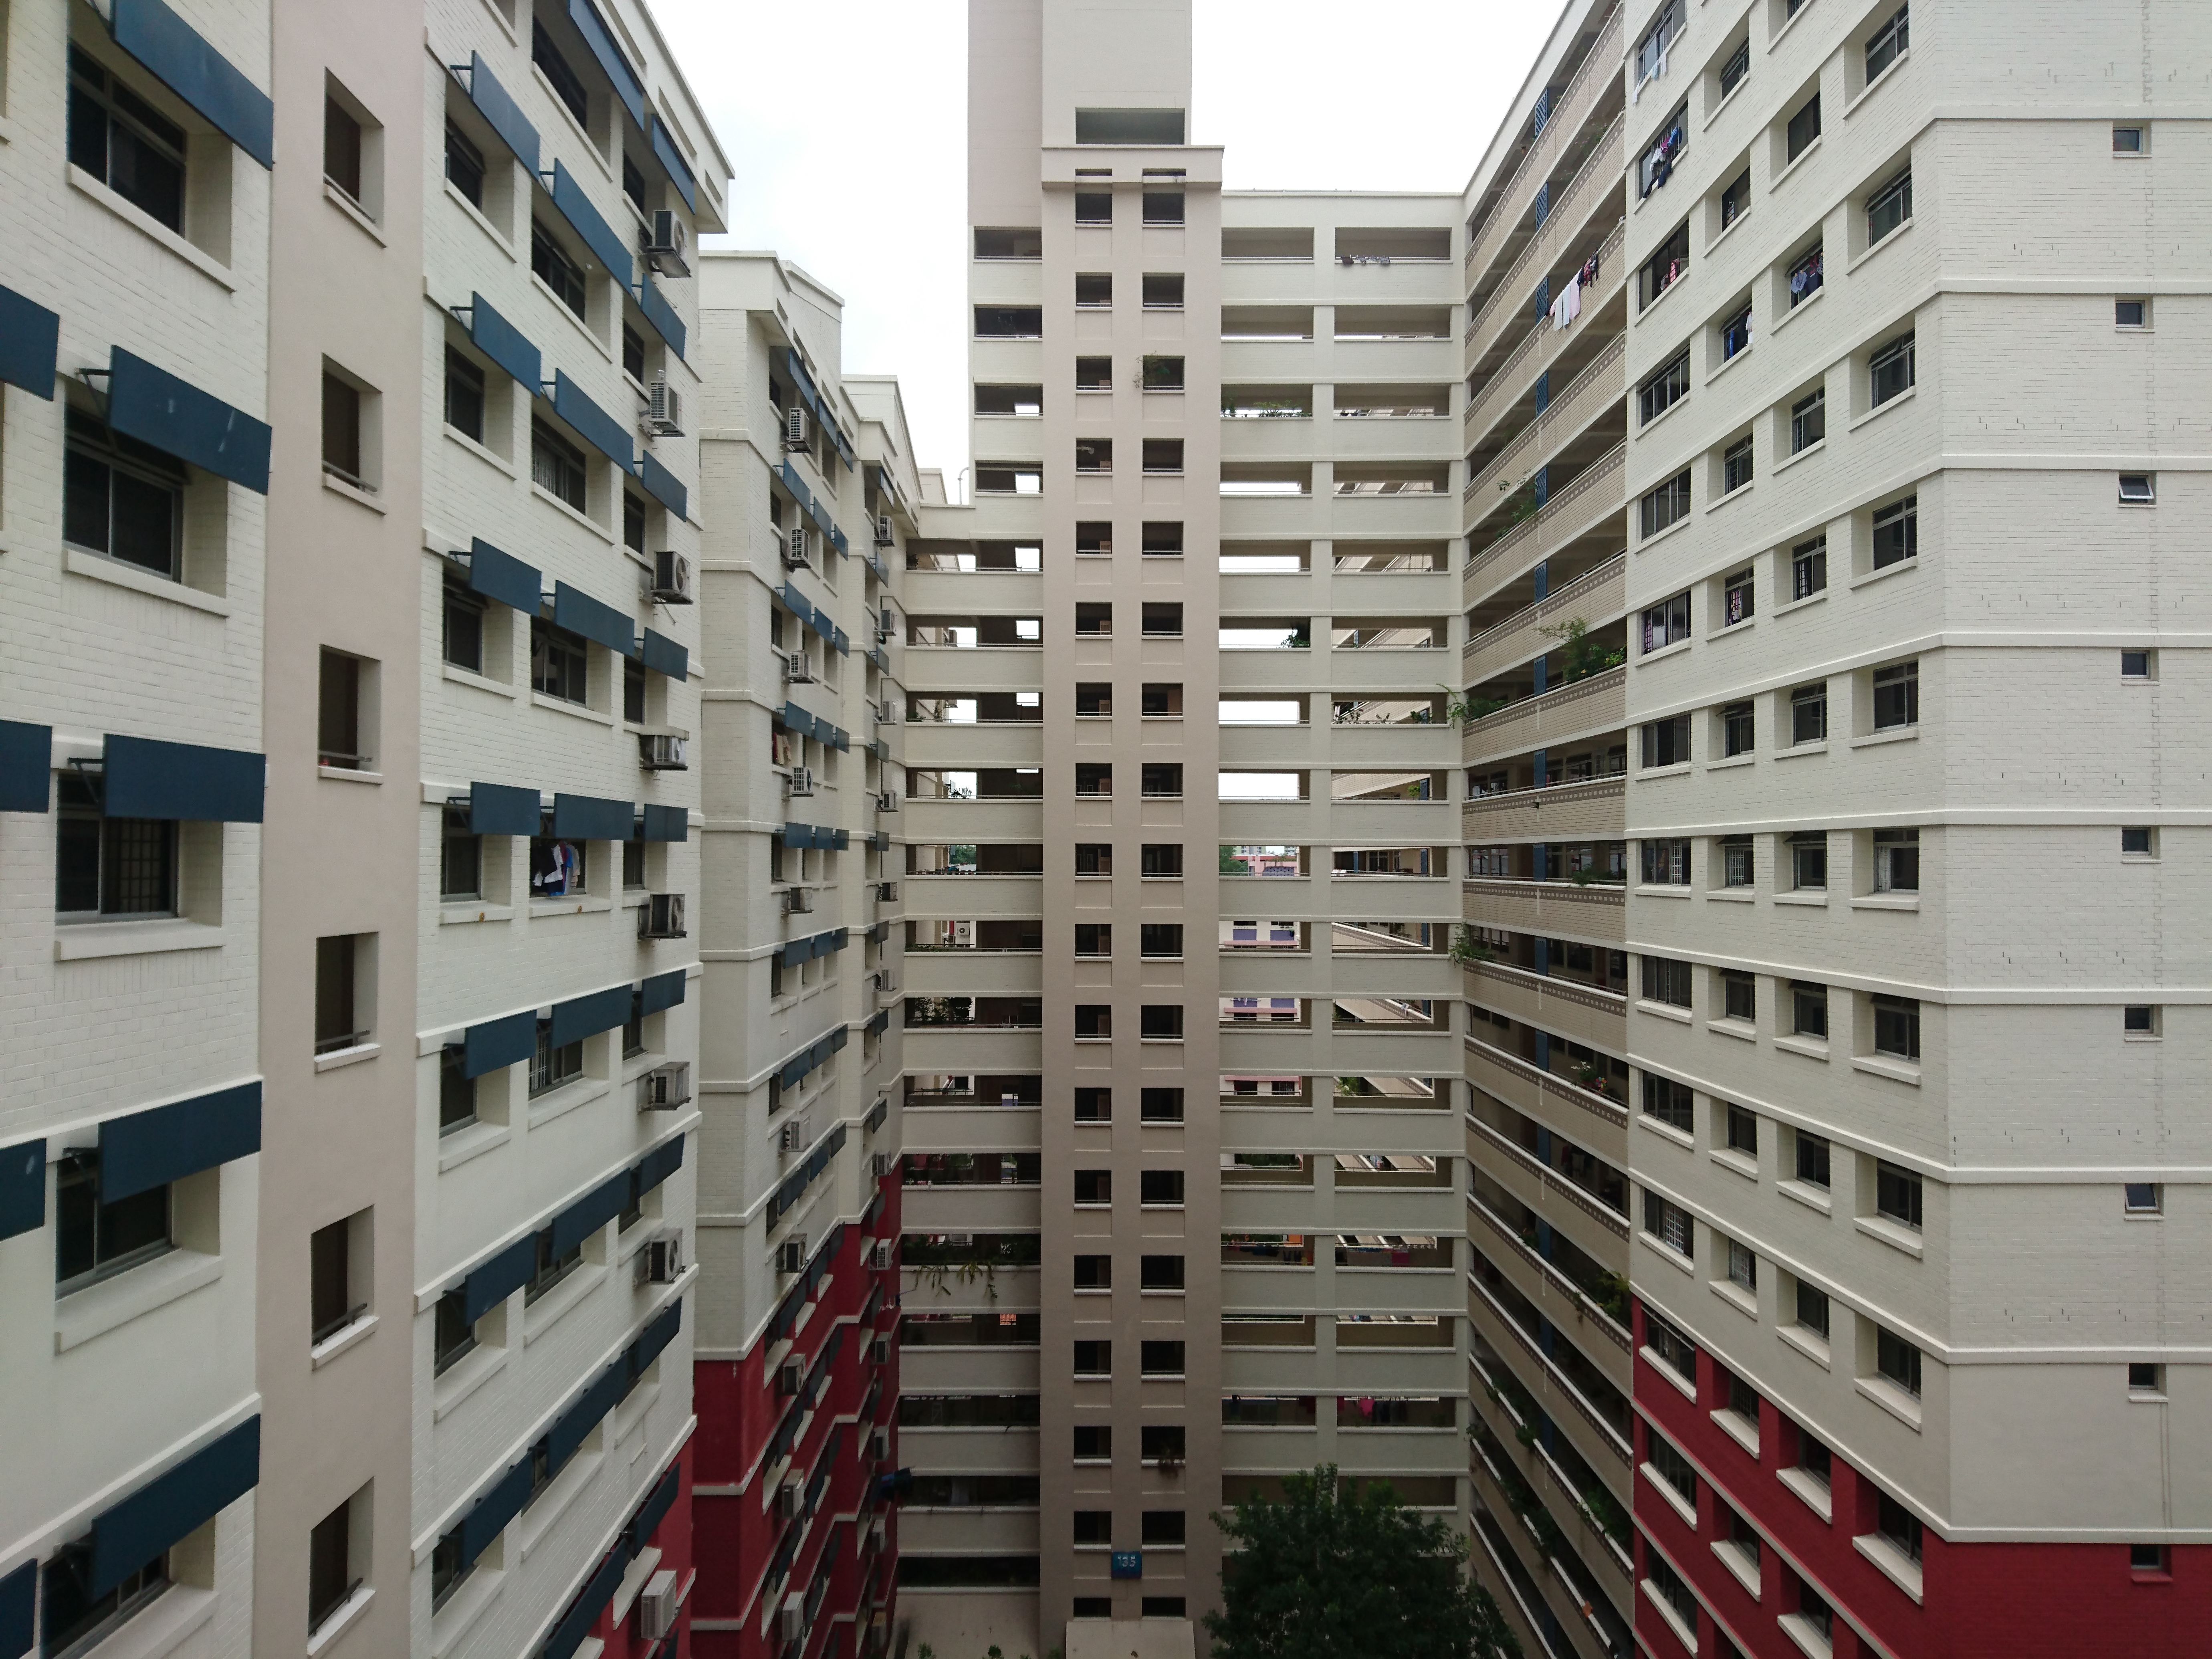 High-rise HDB flats in Singapore